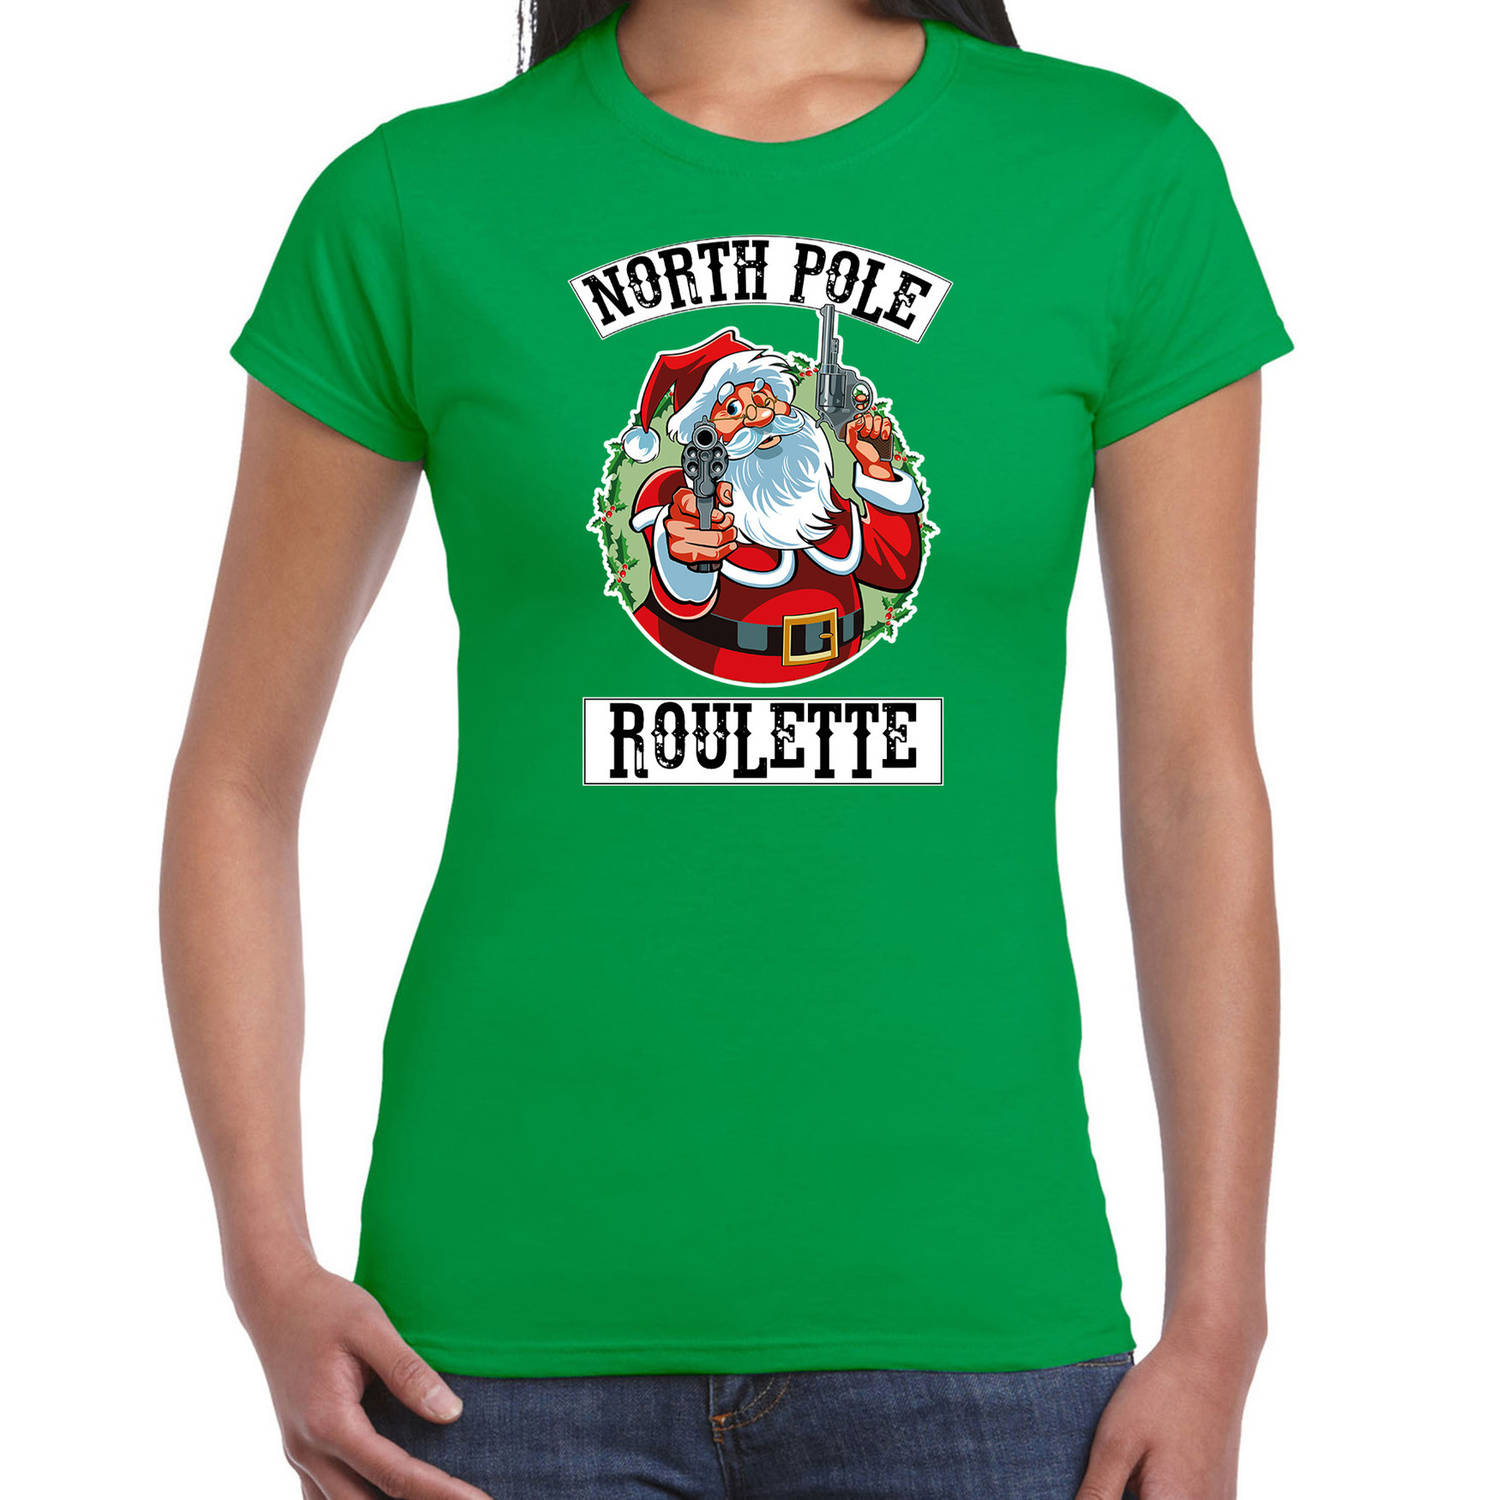 Groen Kerstshirt / Kerstkleding Northpole roulette voor dames XS - kerst t-shirts